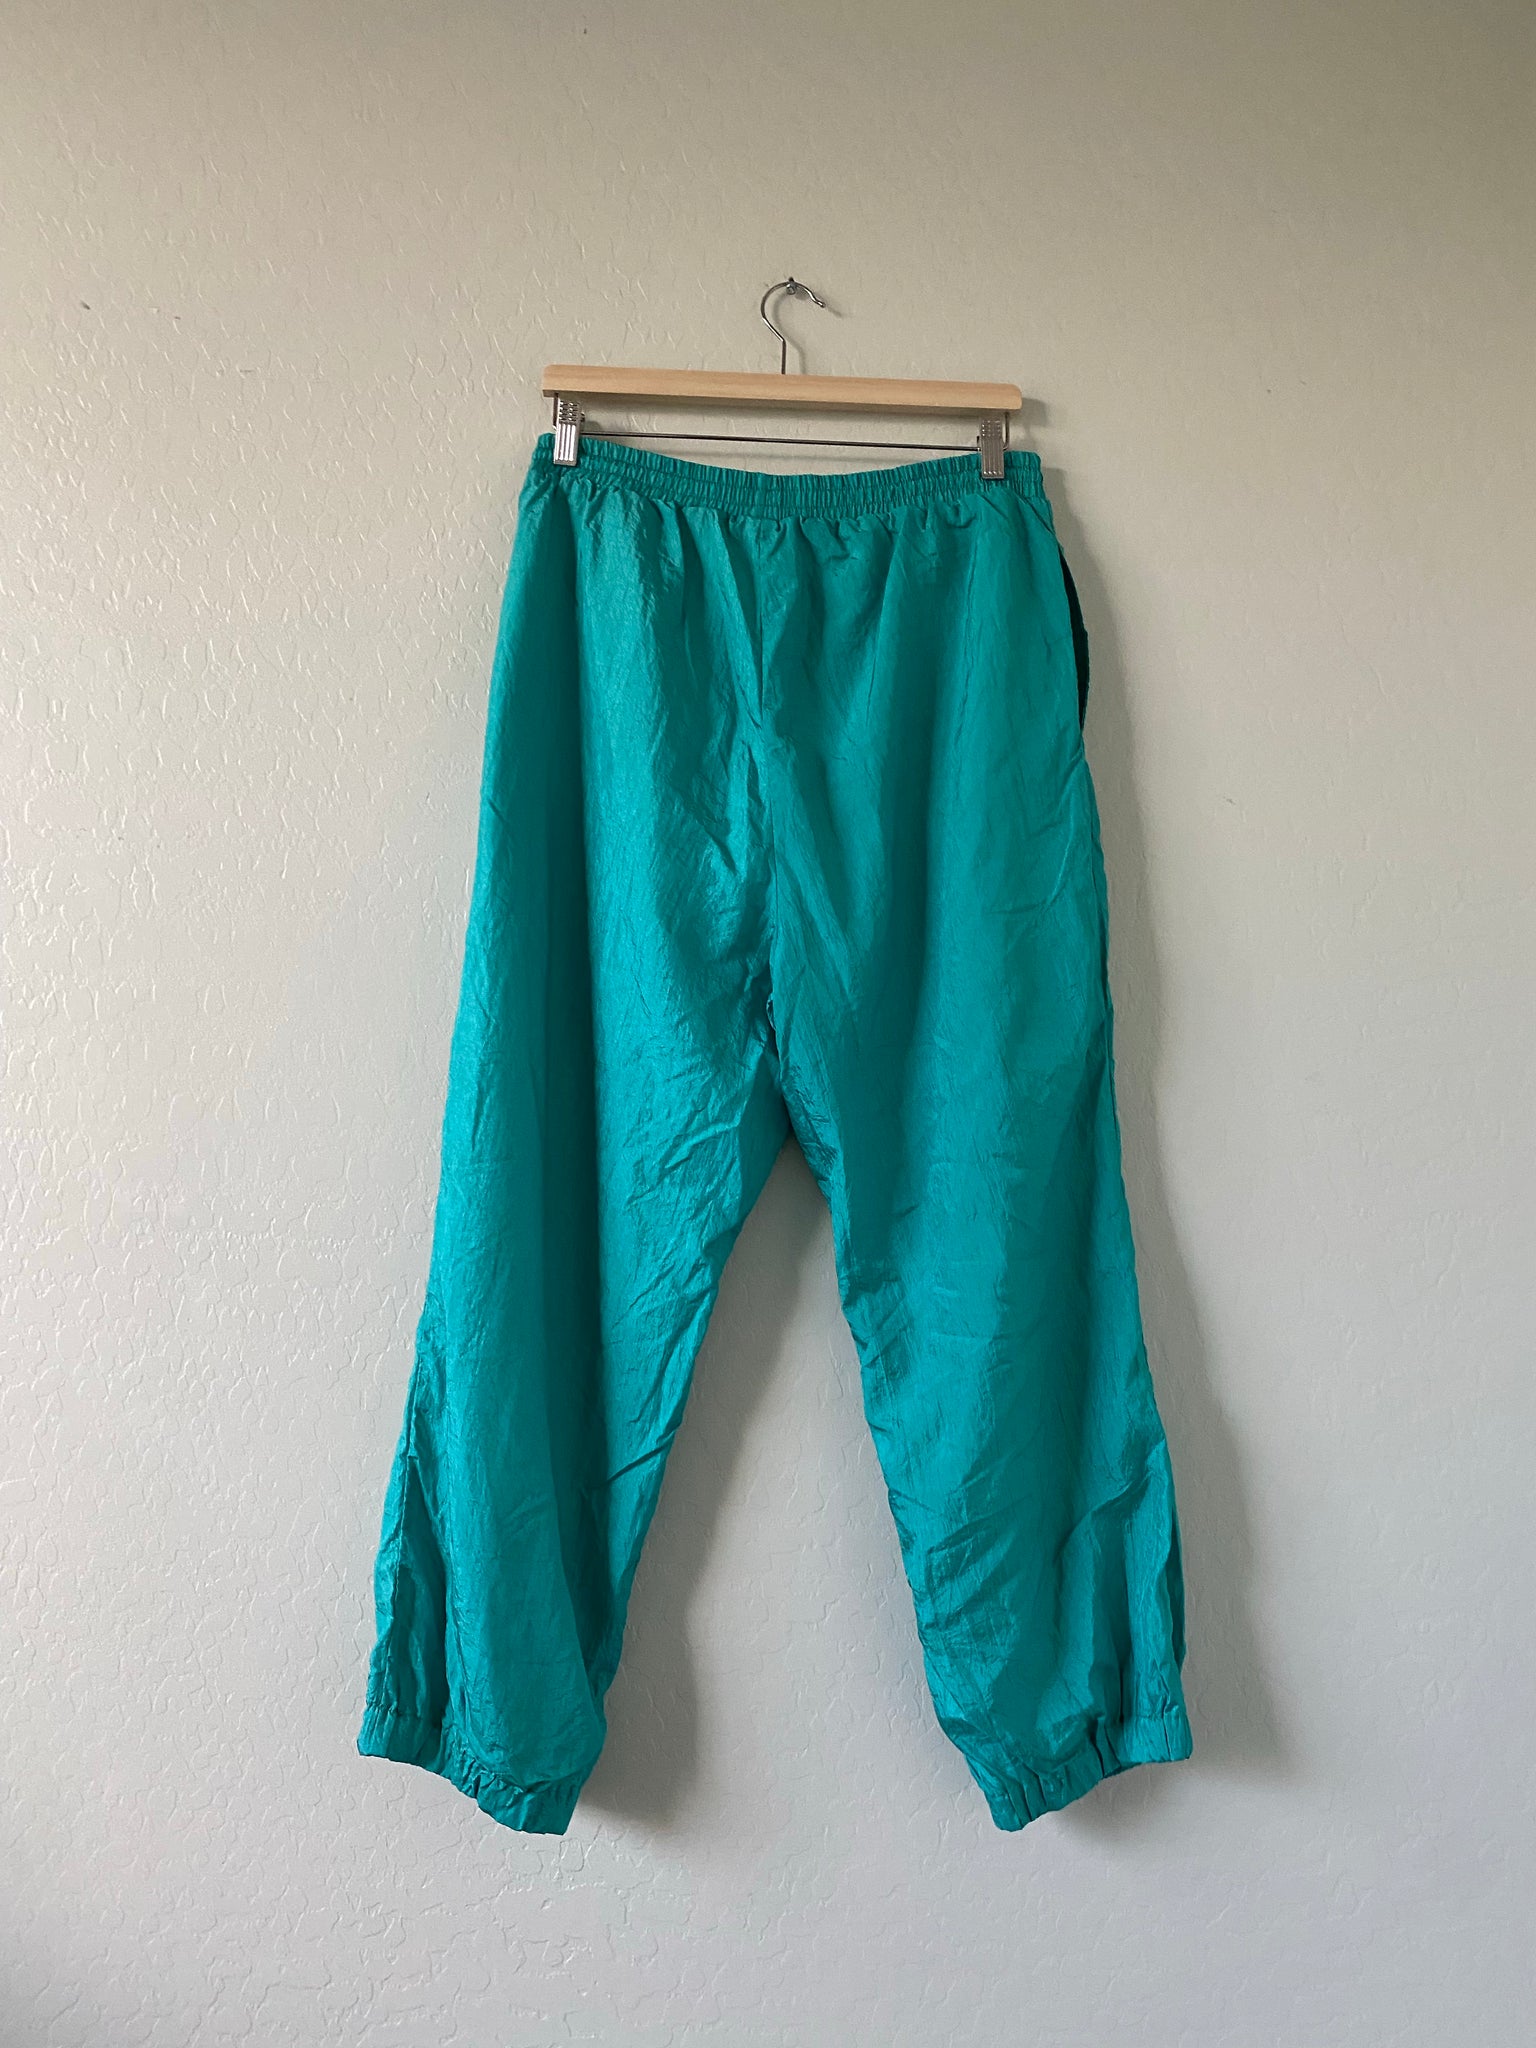 Waist 30 Vintage Parachute Pants – The Weathered Daisy